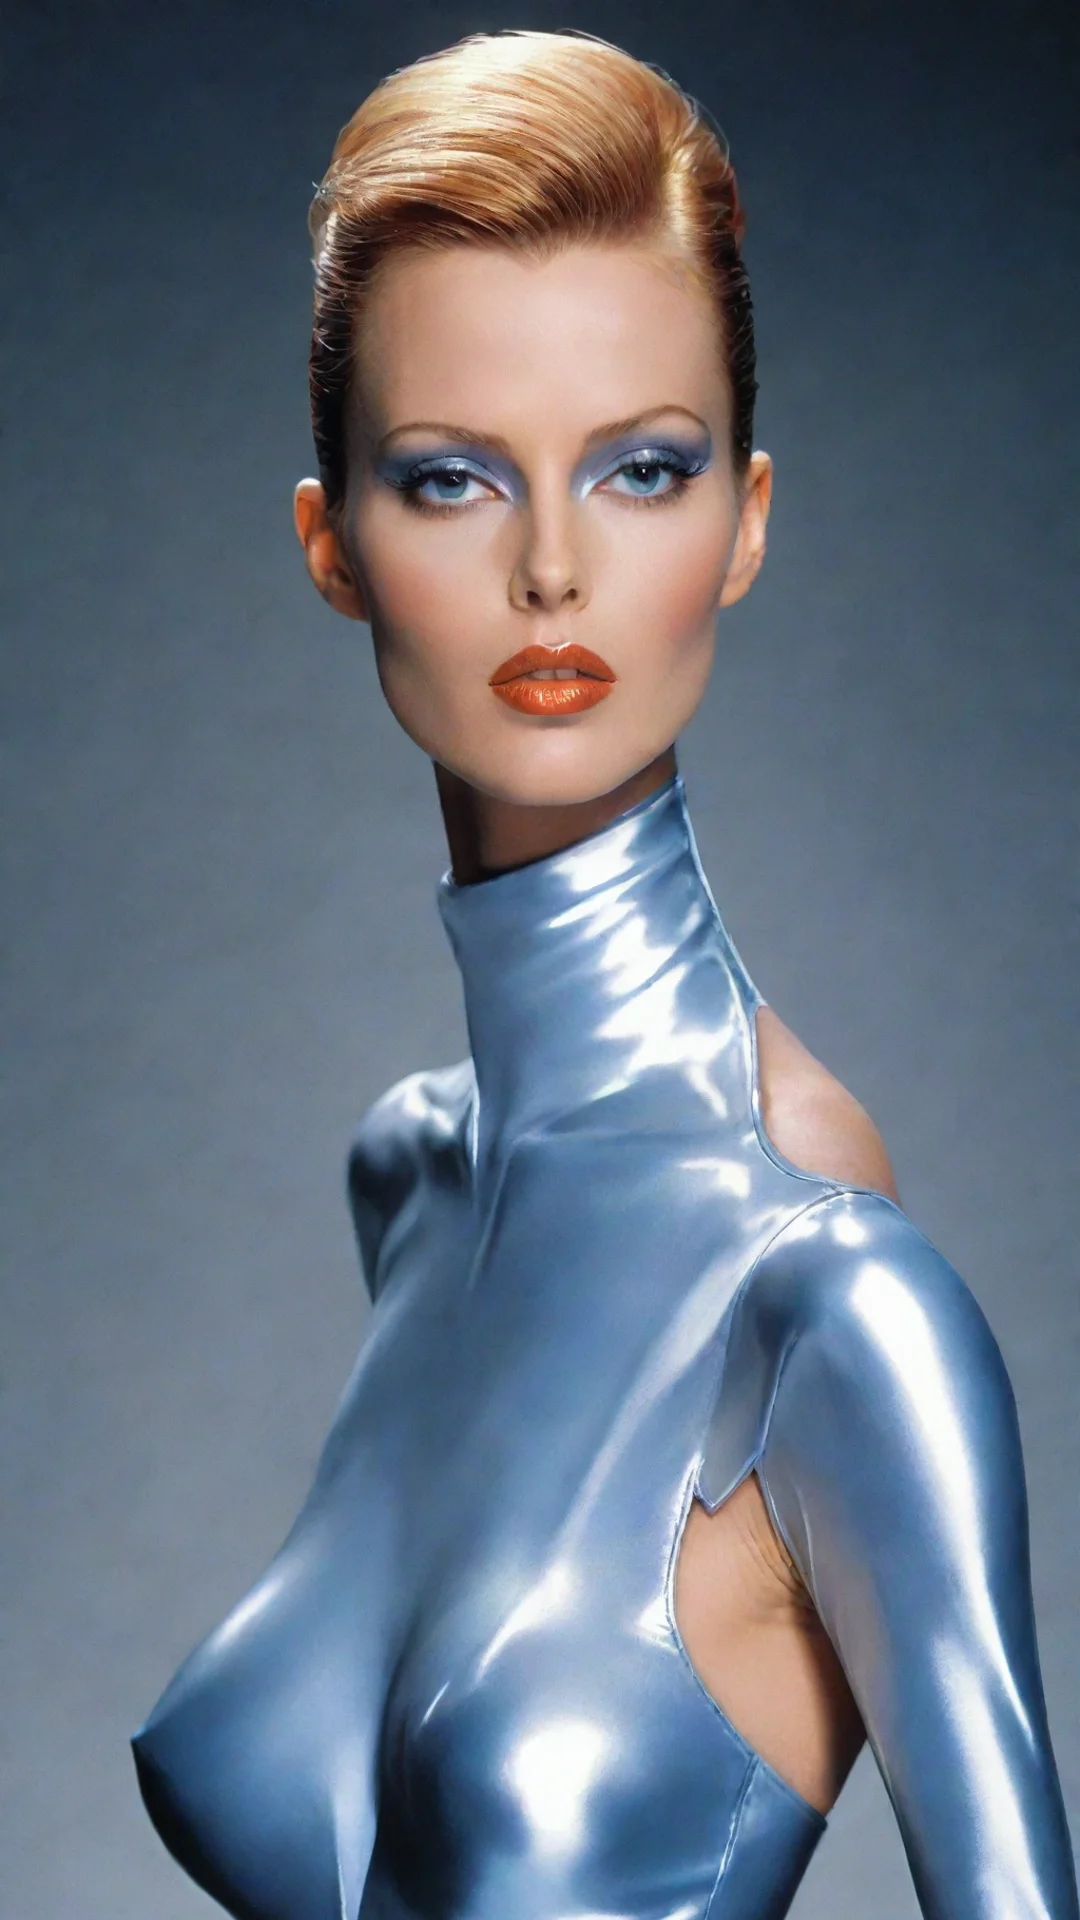 amazing thierry mugler fashion style futuristic supermodel awesome portrait 2 tall